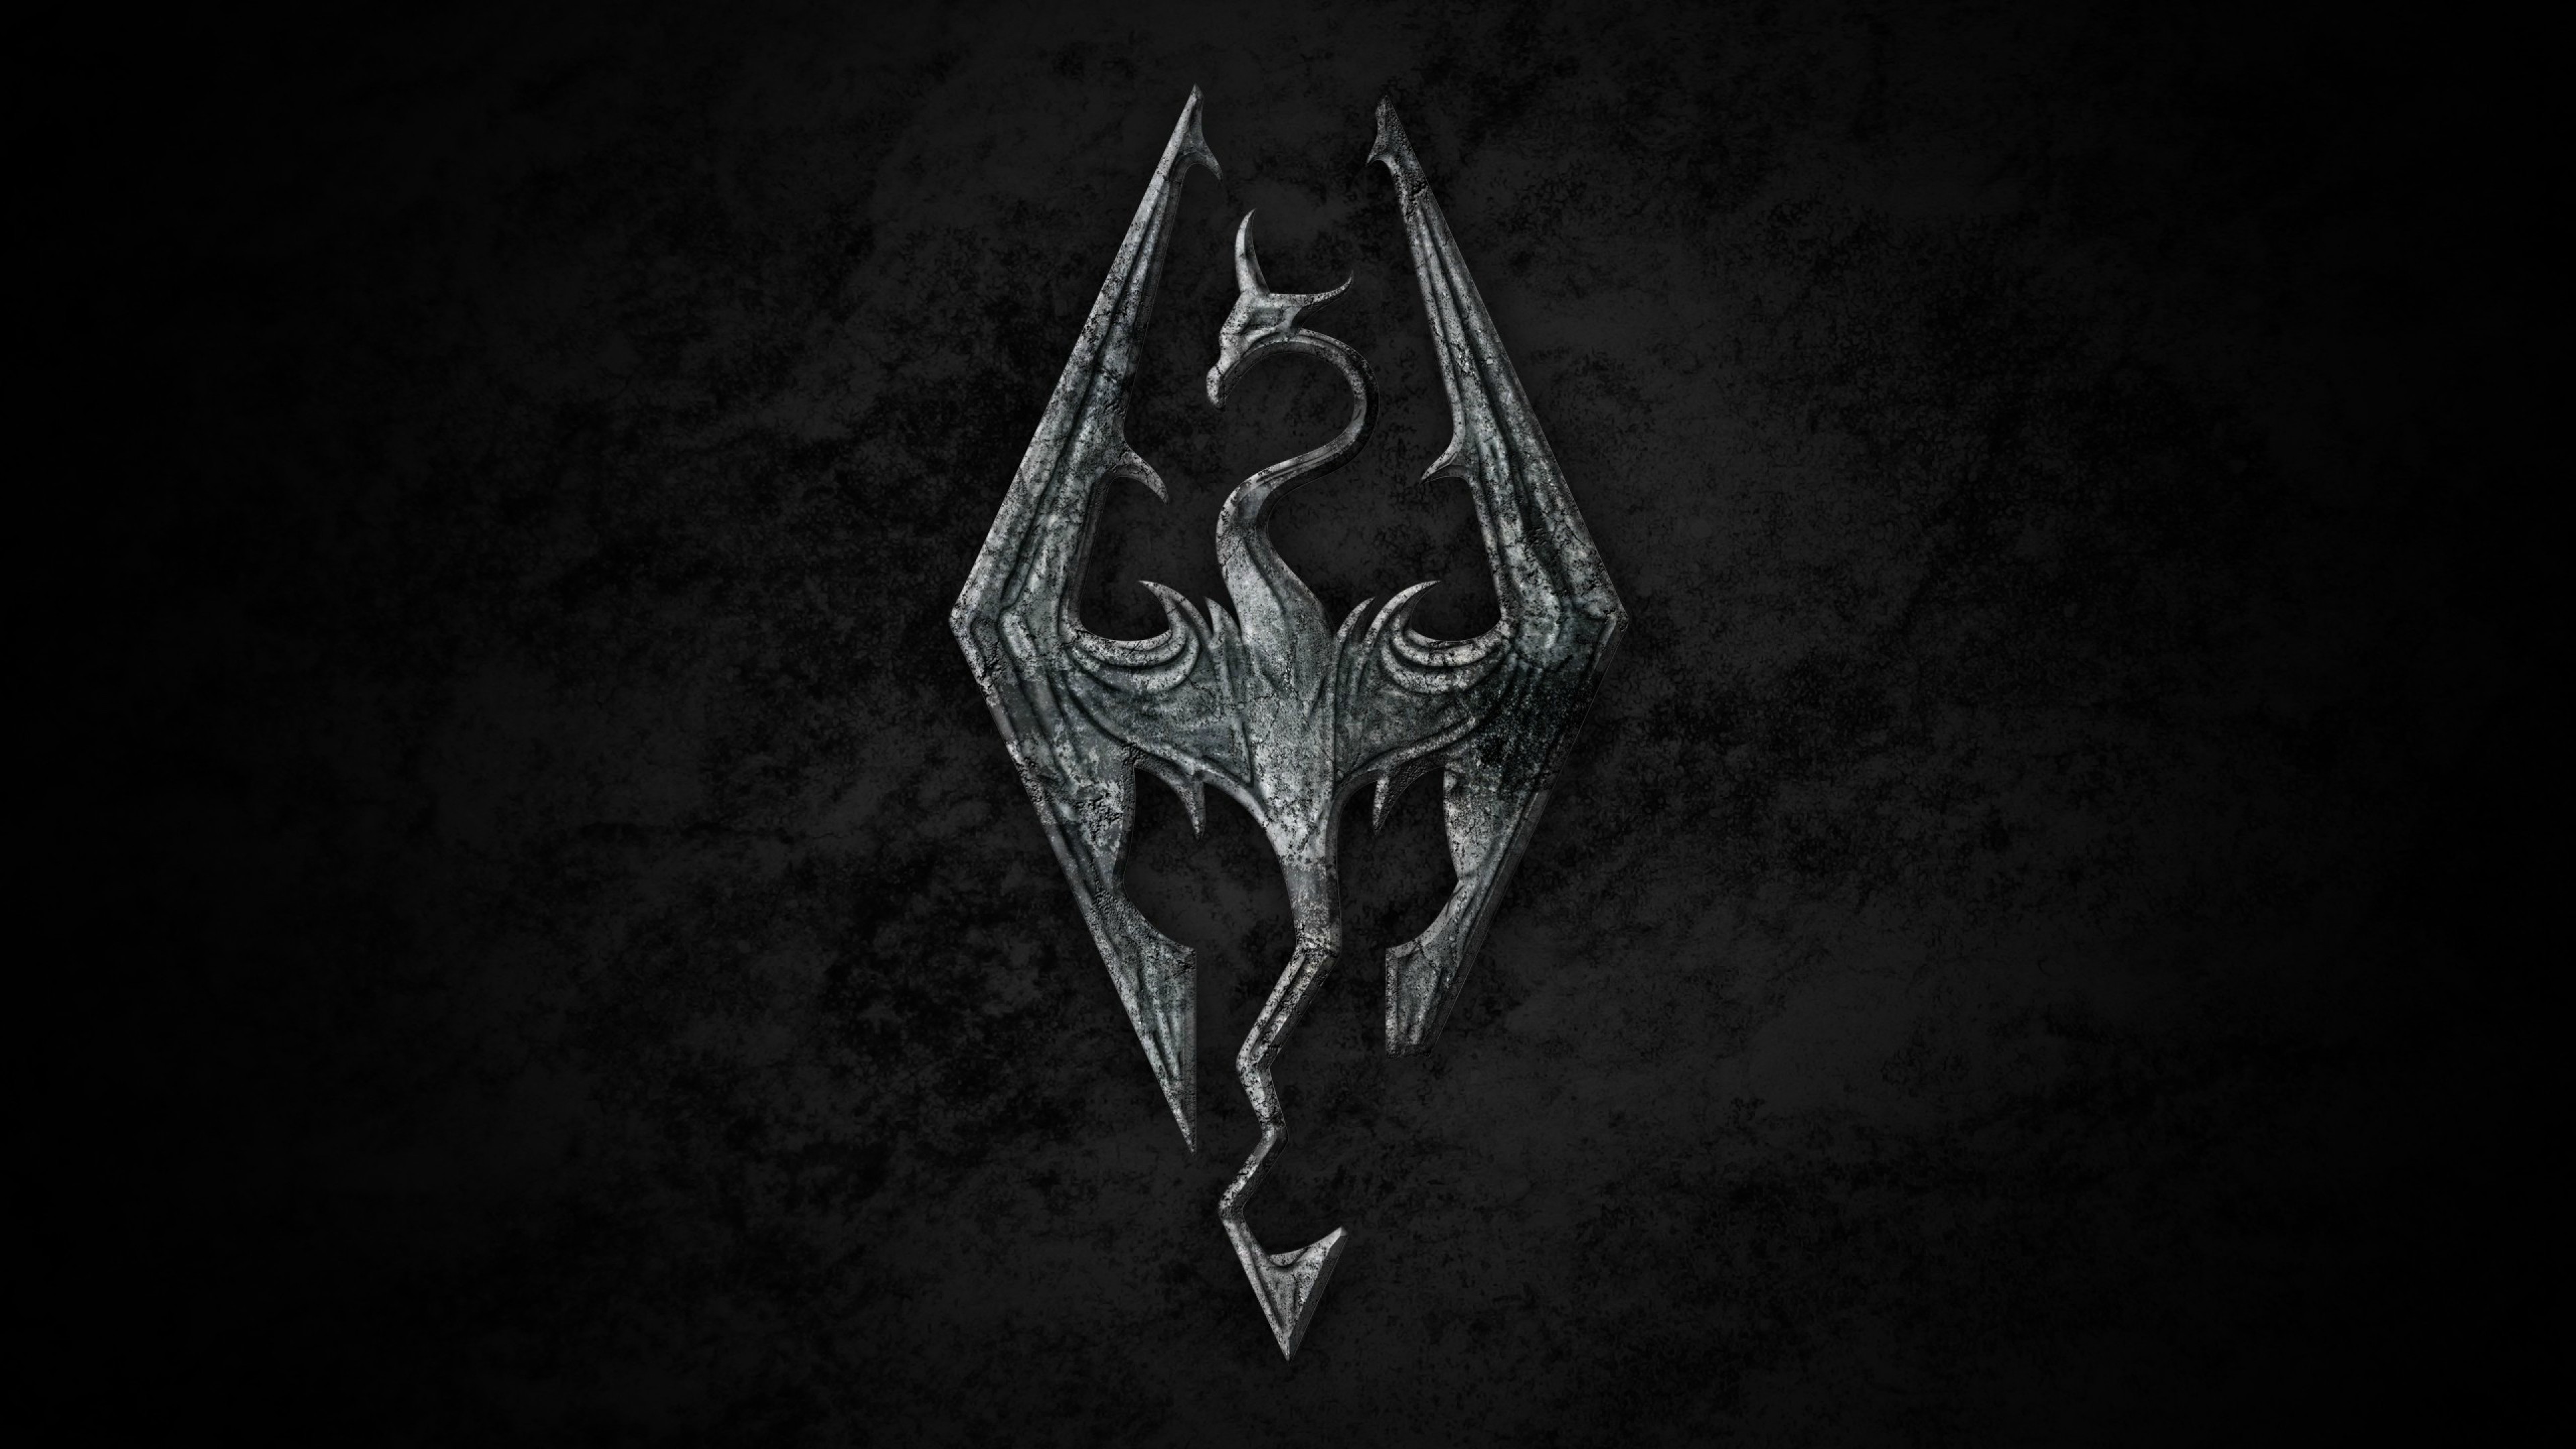 6 1024 1024 8. The Elder Scrolls v Skyrim логотип. The Elder Scrolls v: Skyrim значок. Tes 5 Skyrim лого. The Eider Scrolls v: Skyrim логотип.